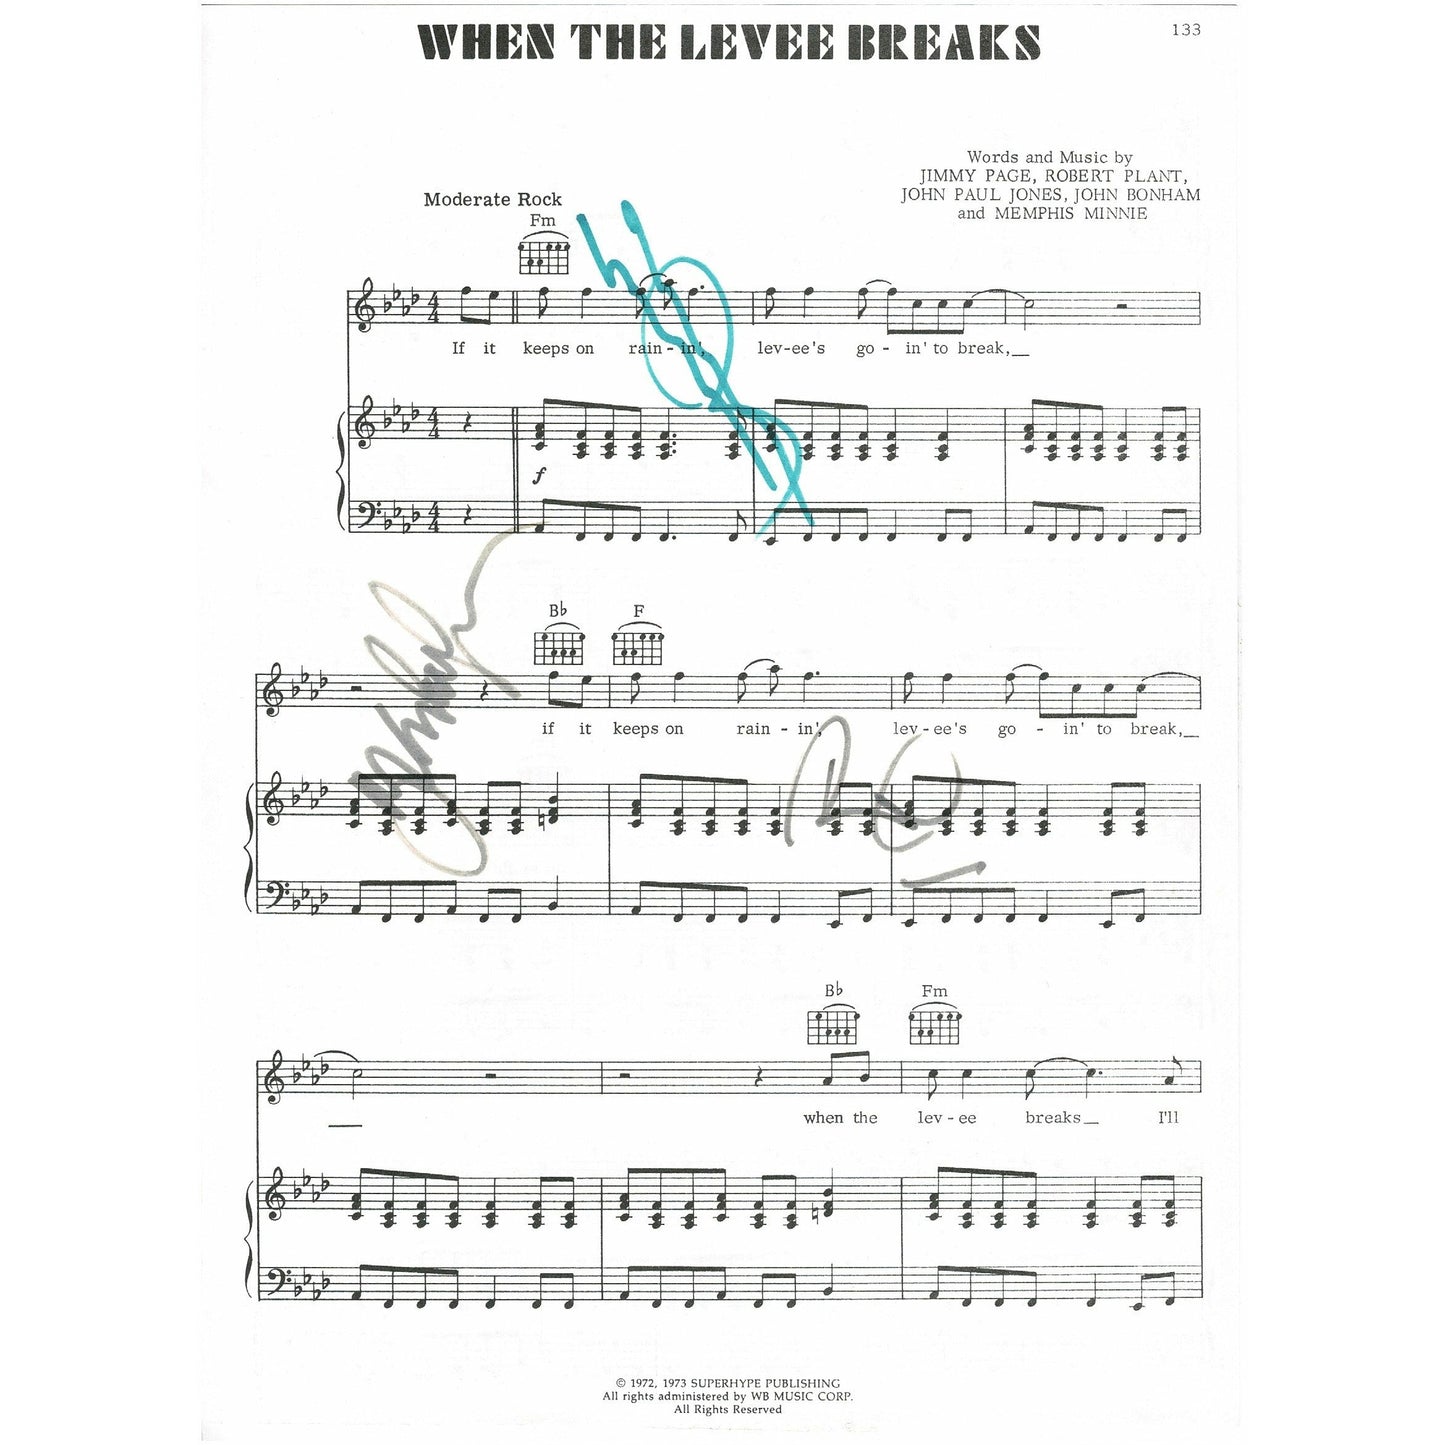 Led Zeppelin autographed sheet music